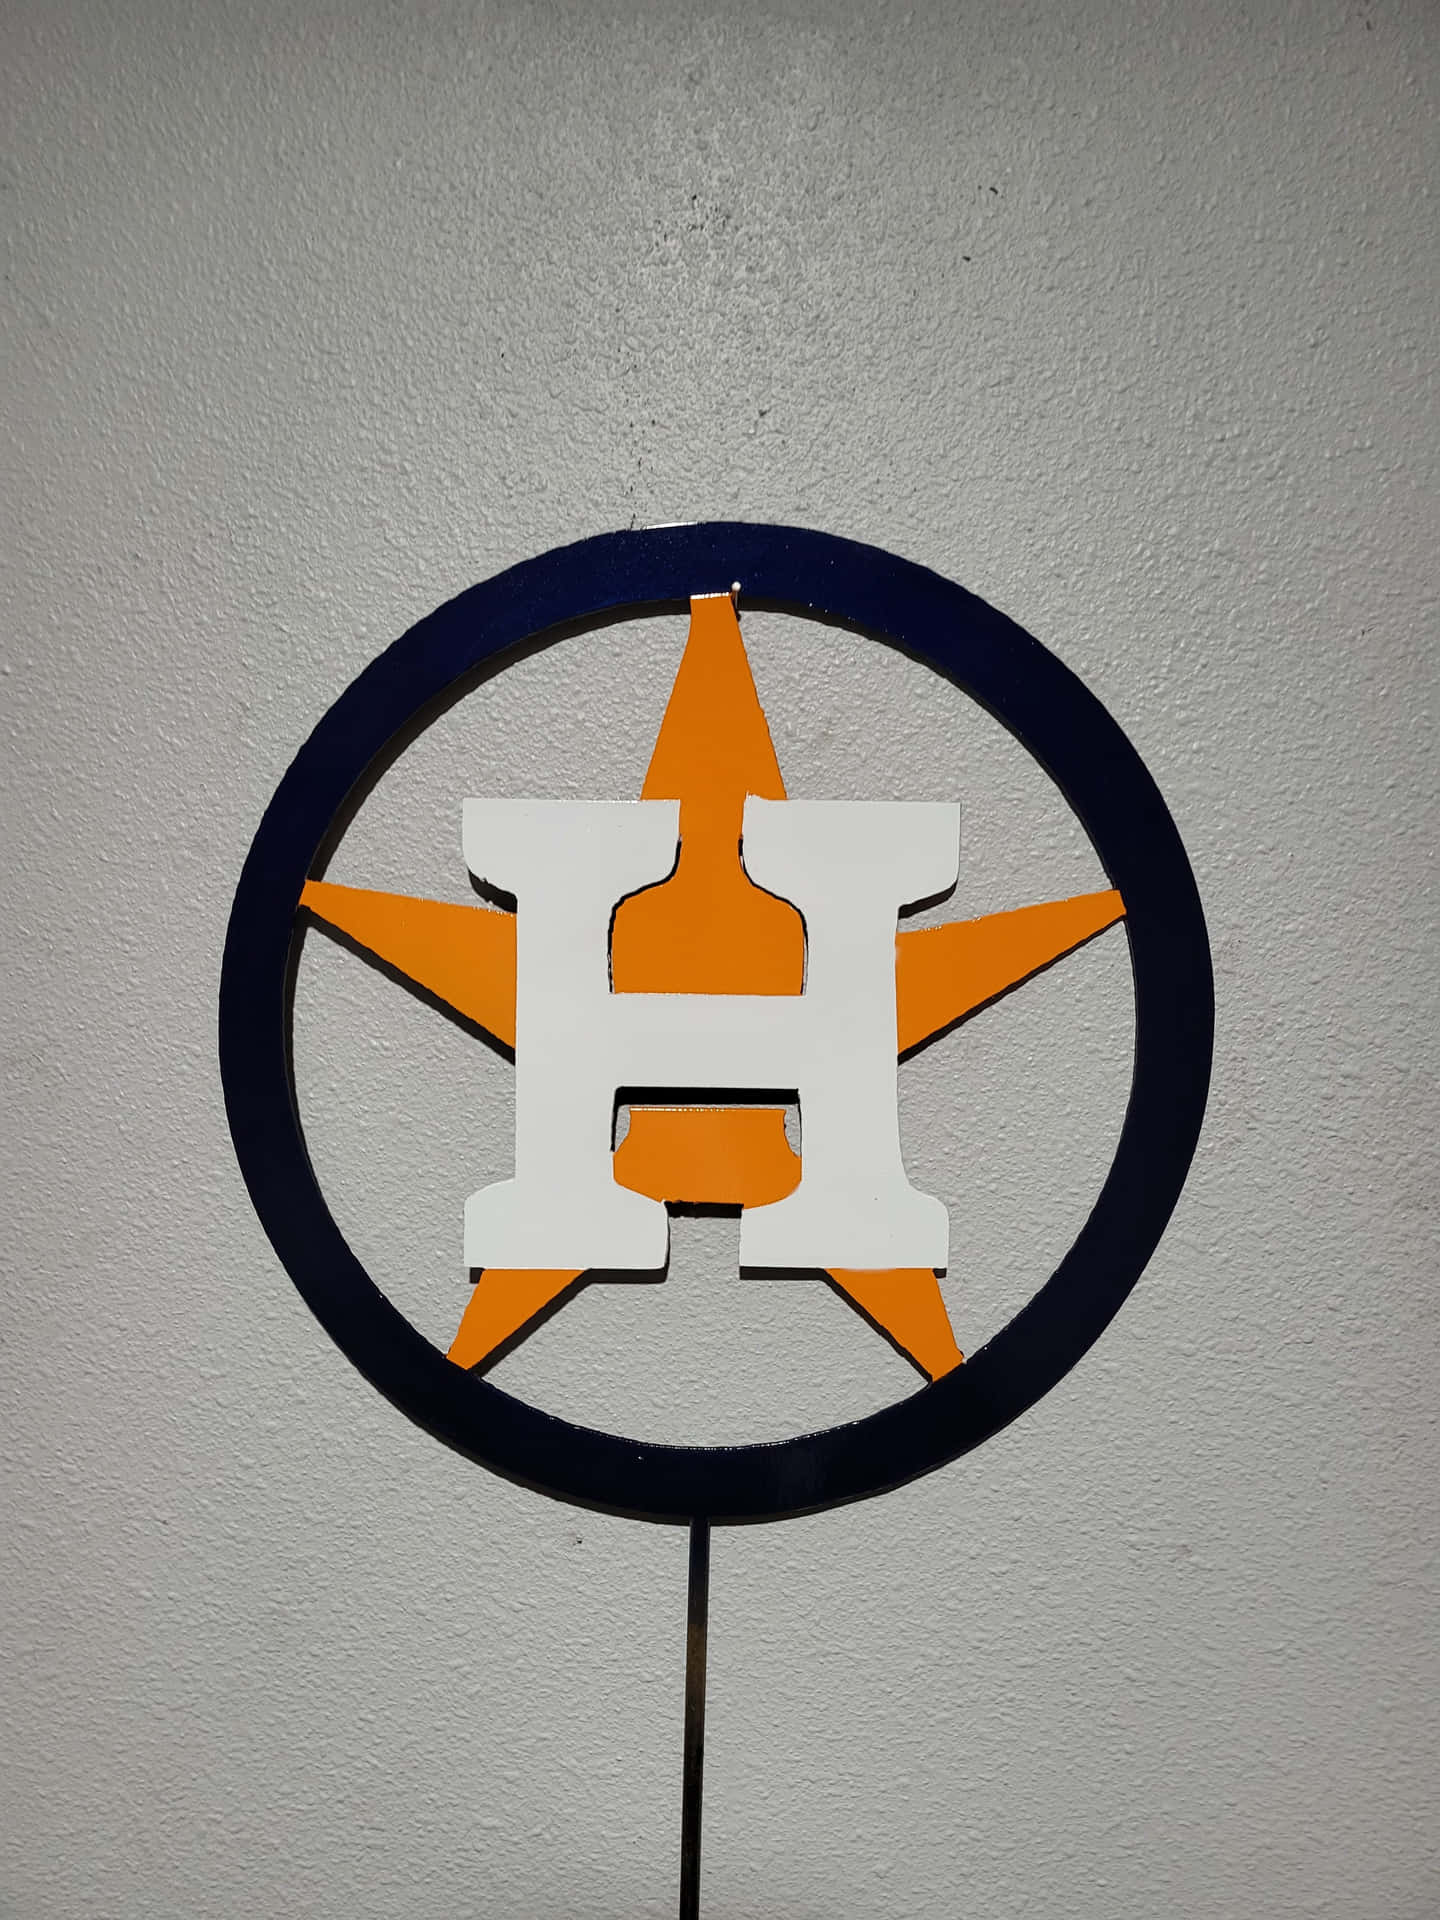 Houston Astros Baseball Team Logos Background